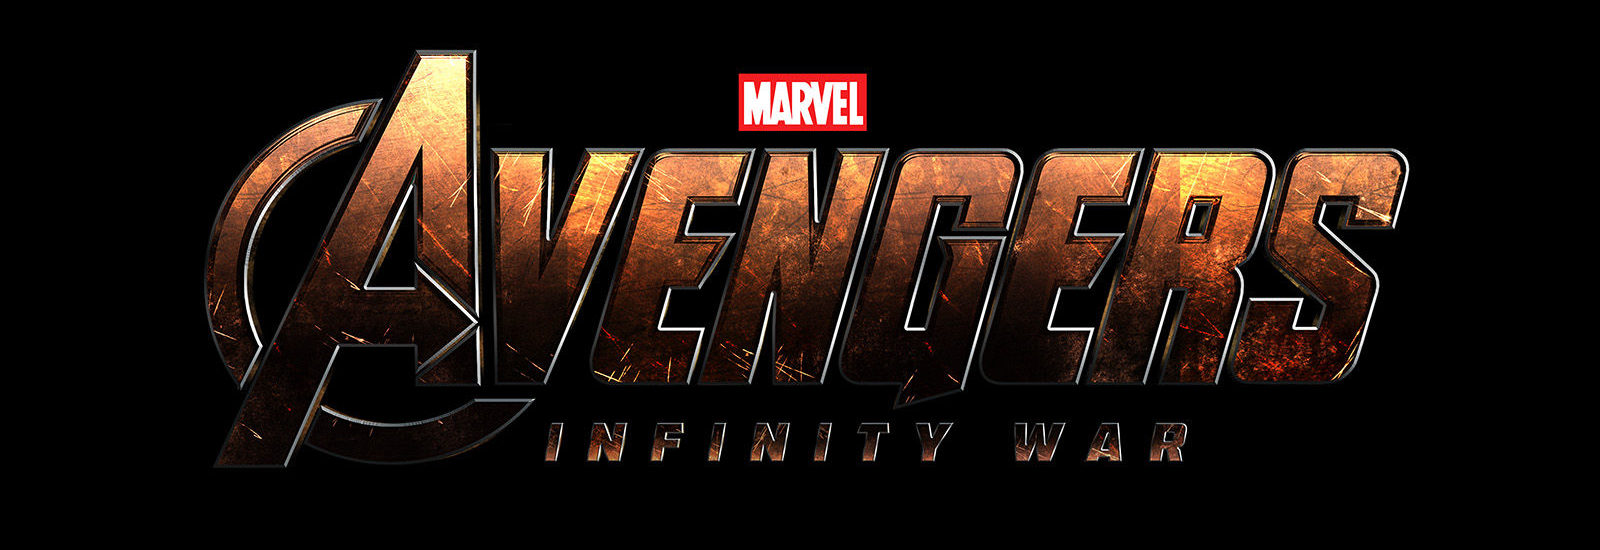 Crítica Avengers Infinity War Sin Spoiler